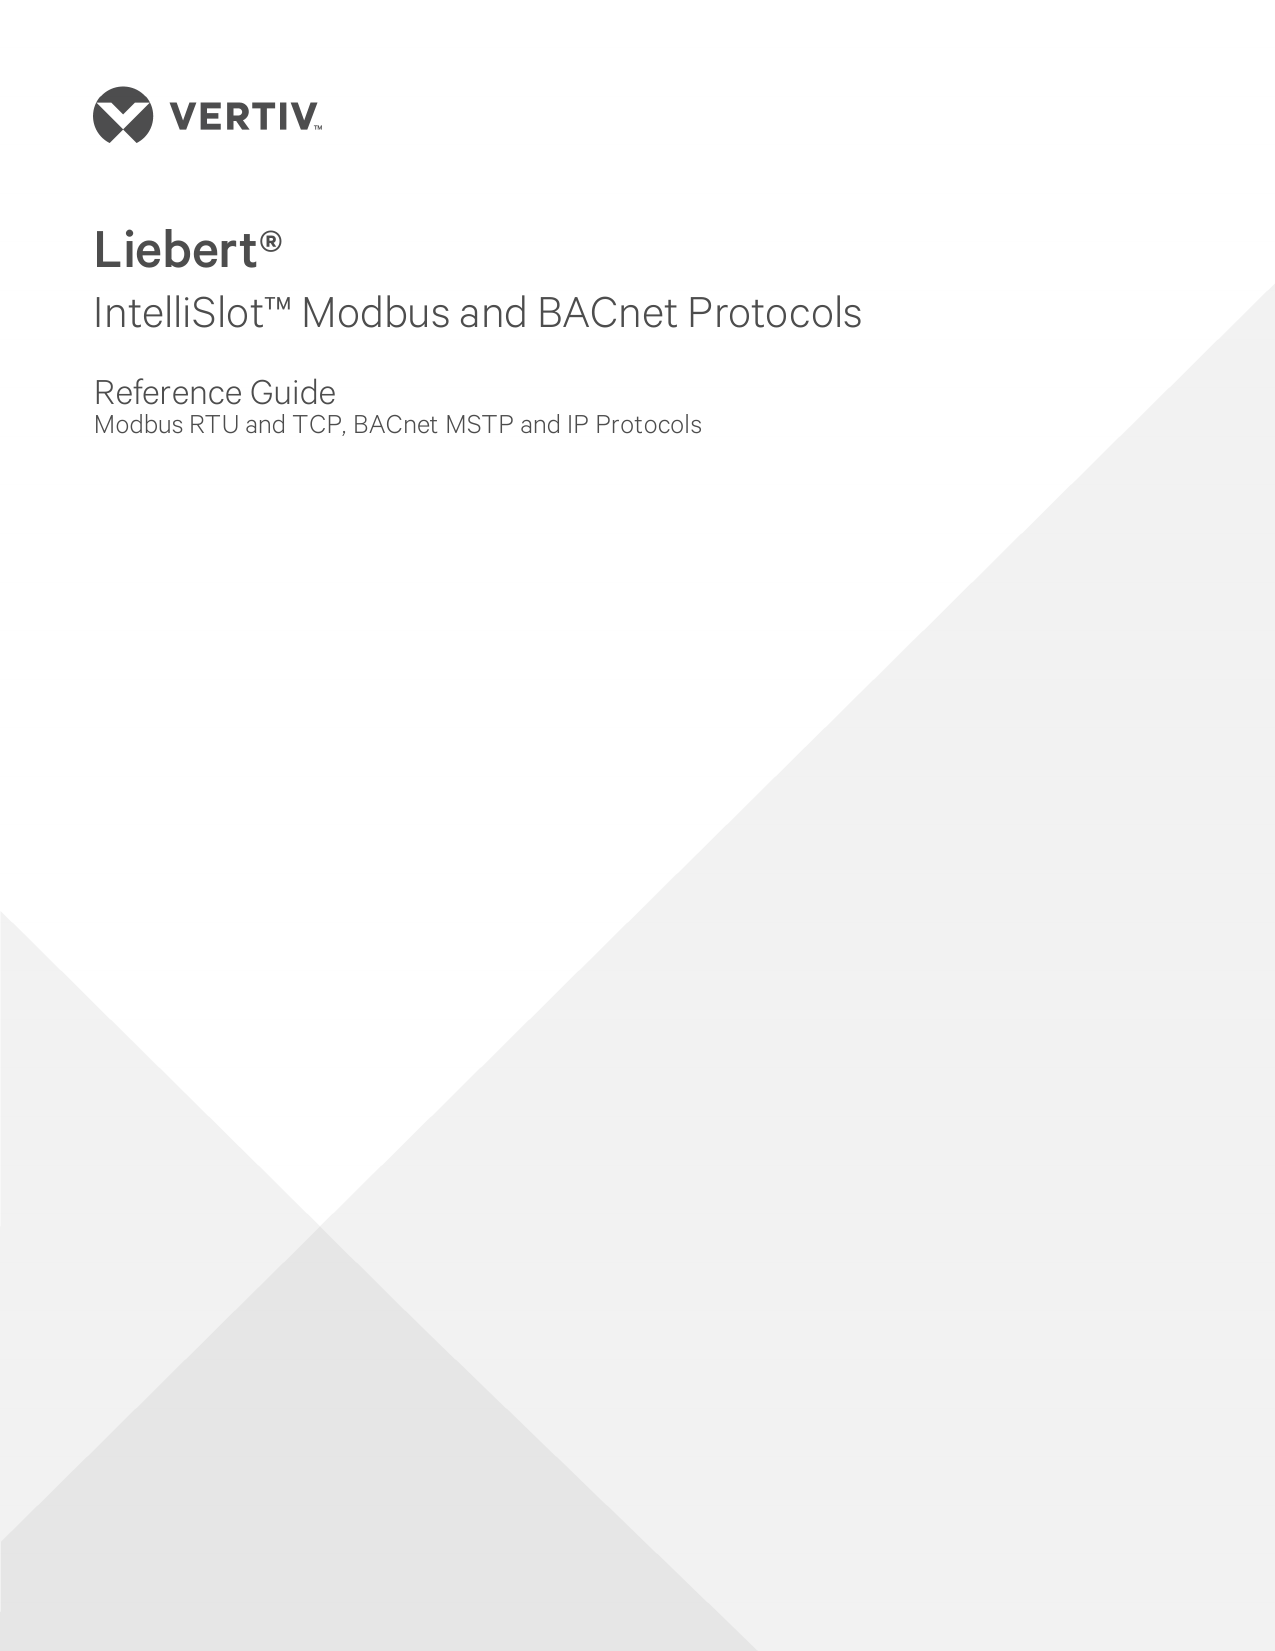 liebert-intellislot-reference-guide-SL-28170 001